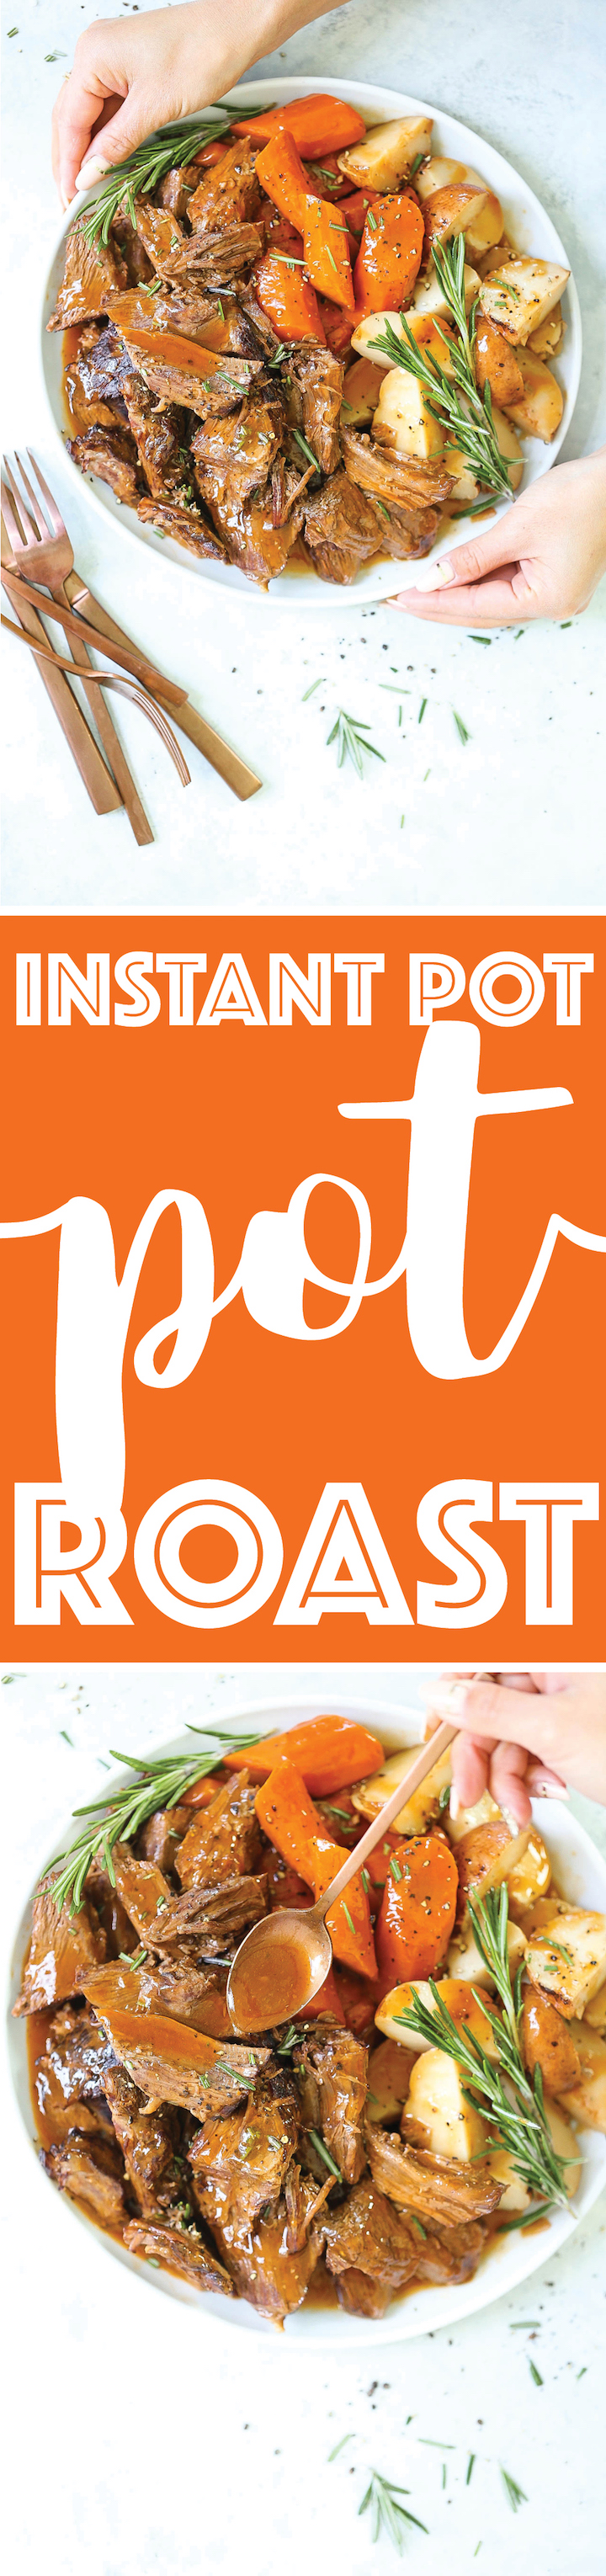 https://s23209.pcdn.co/wp-content/uploads/2018/04/Instant-Pot-Pot-Roast-copy-1.jpg